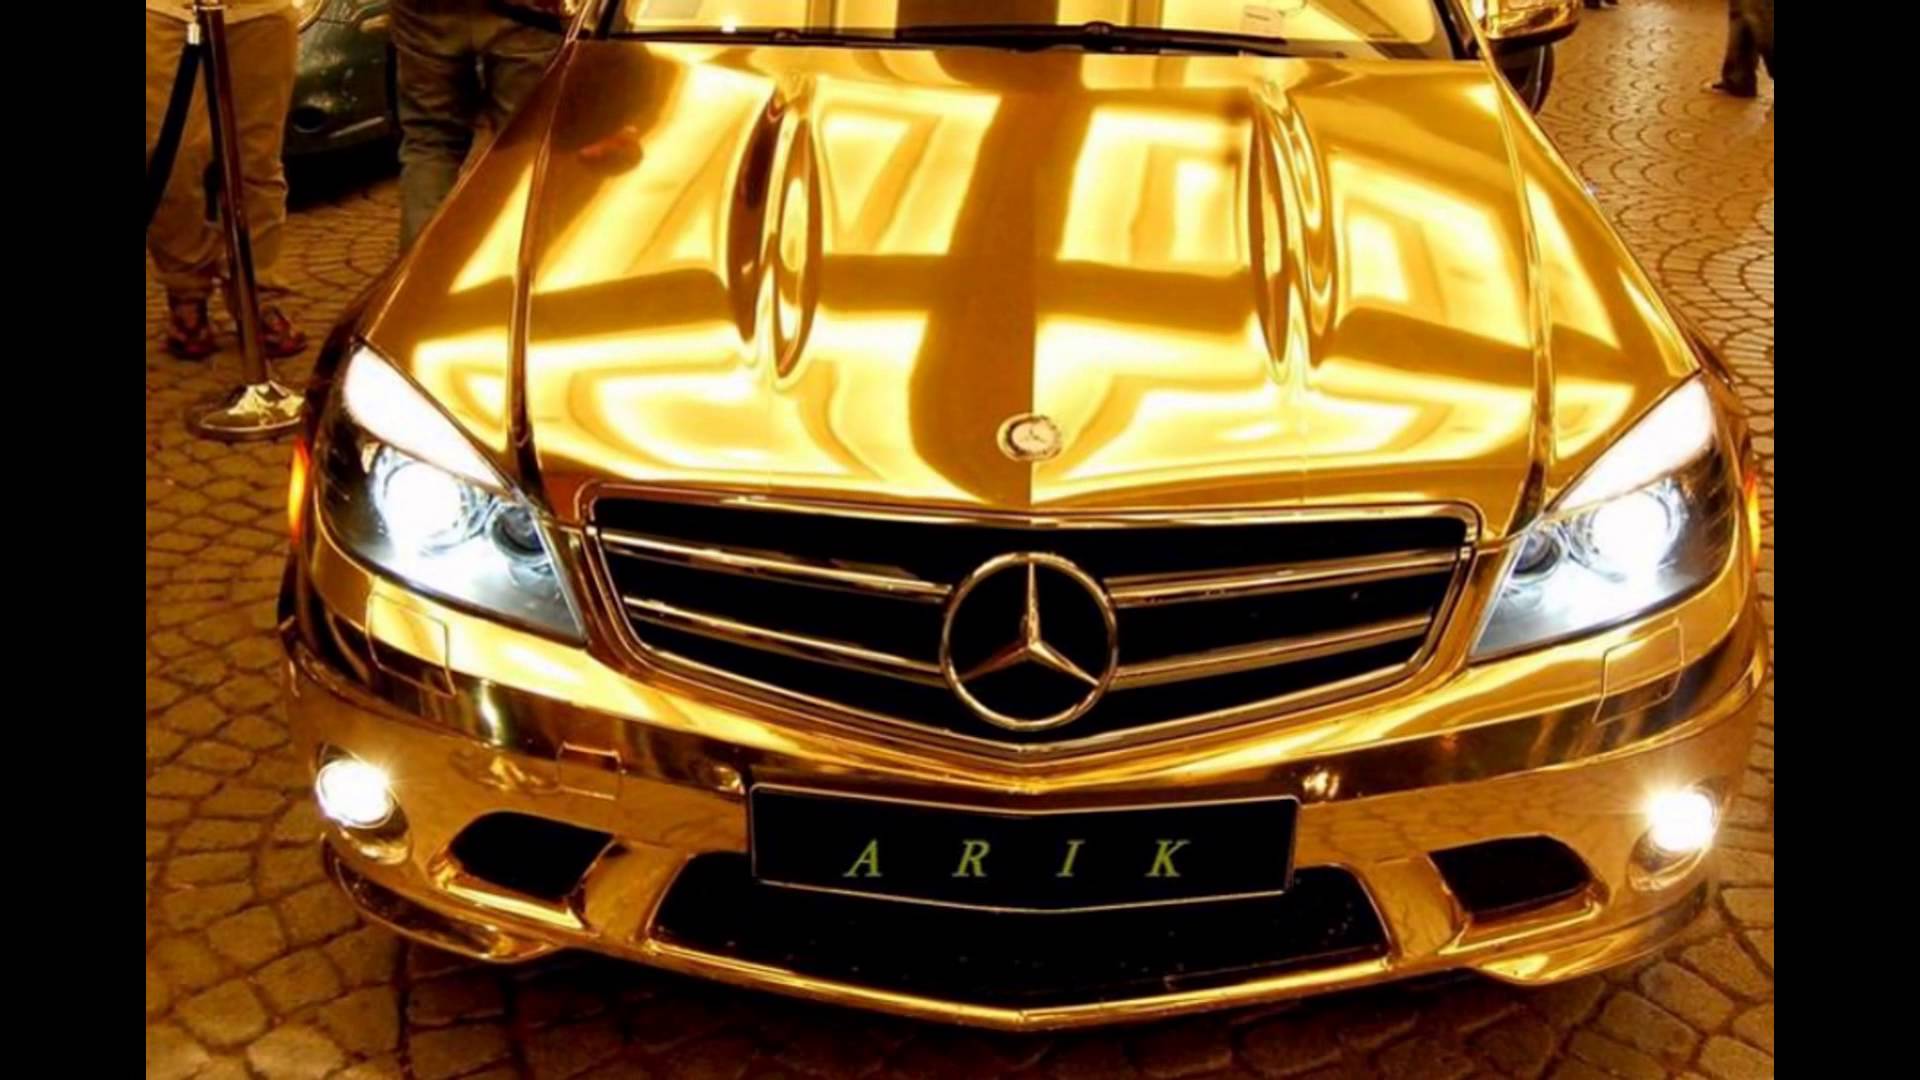 Golden Cars Of Dubai Sheikhs - YouTube